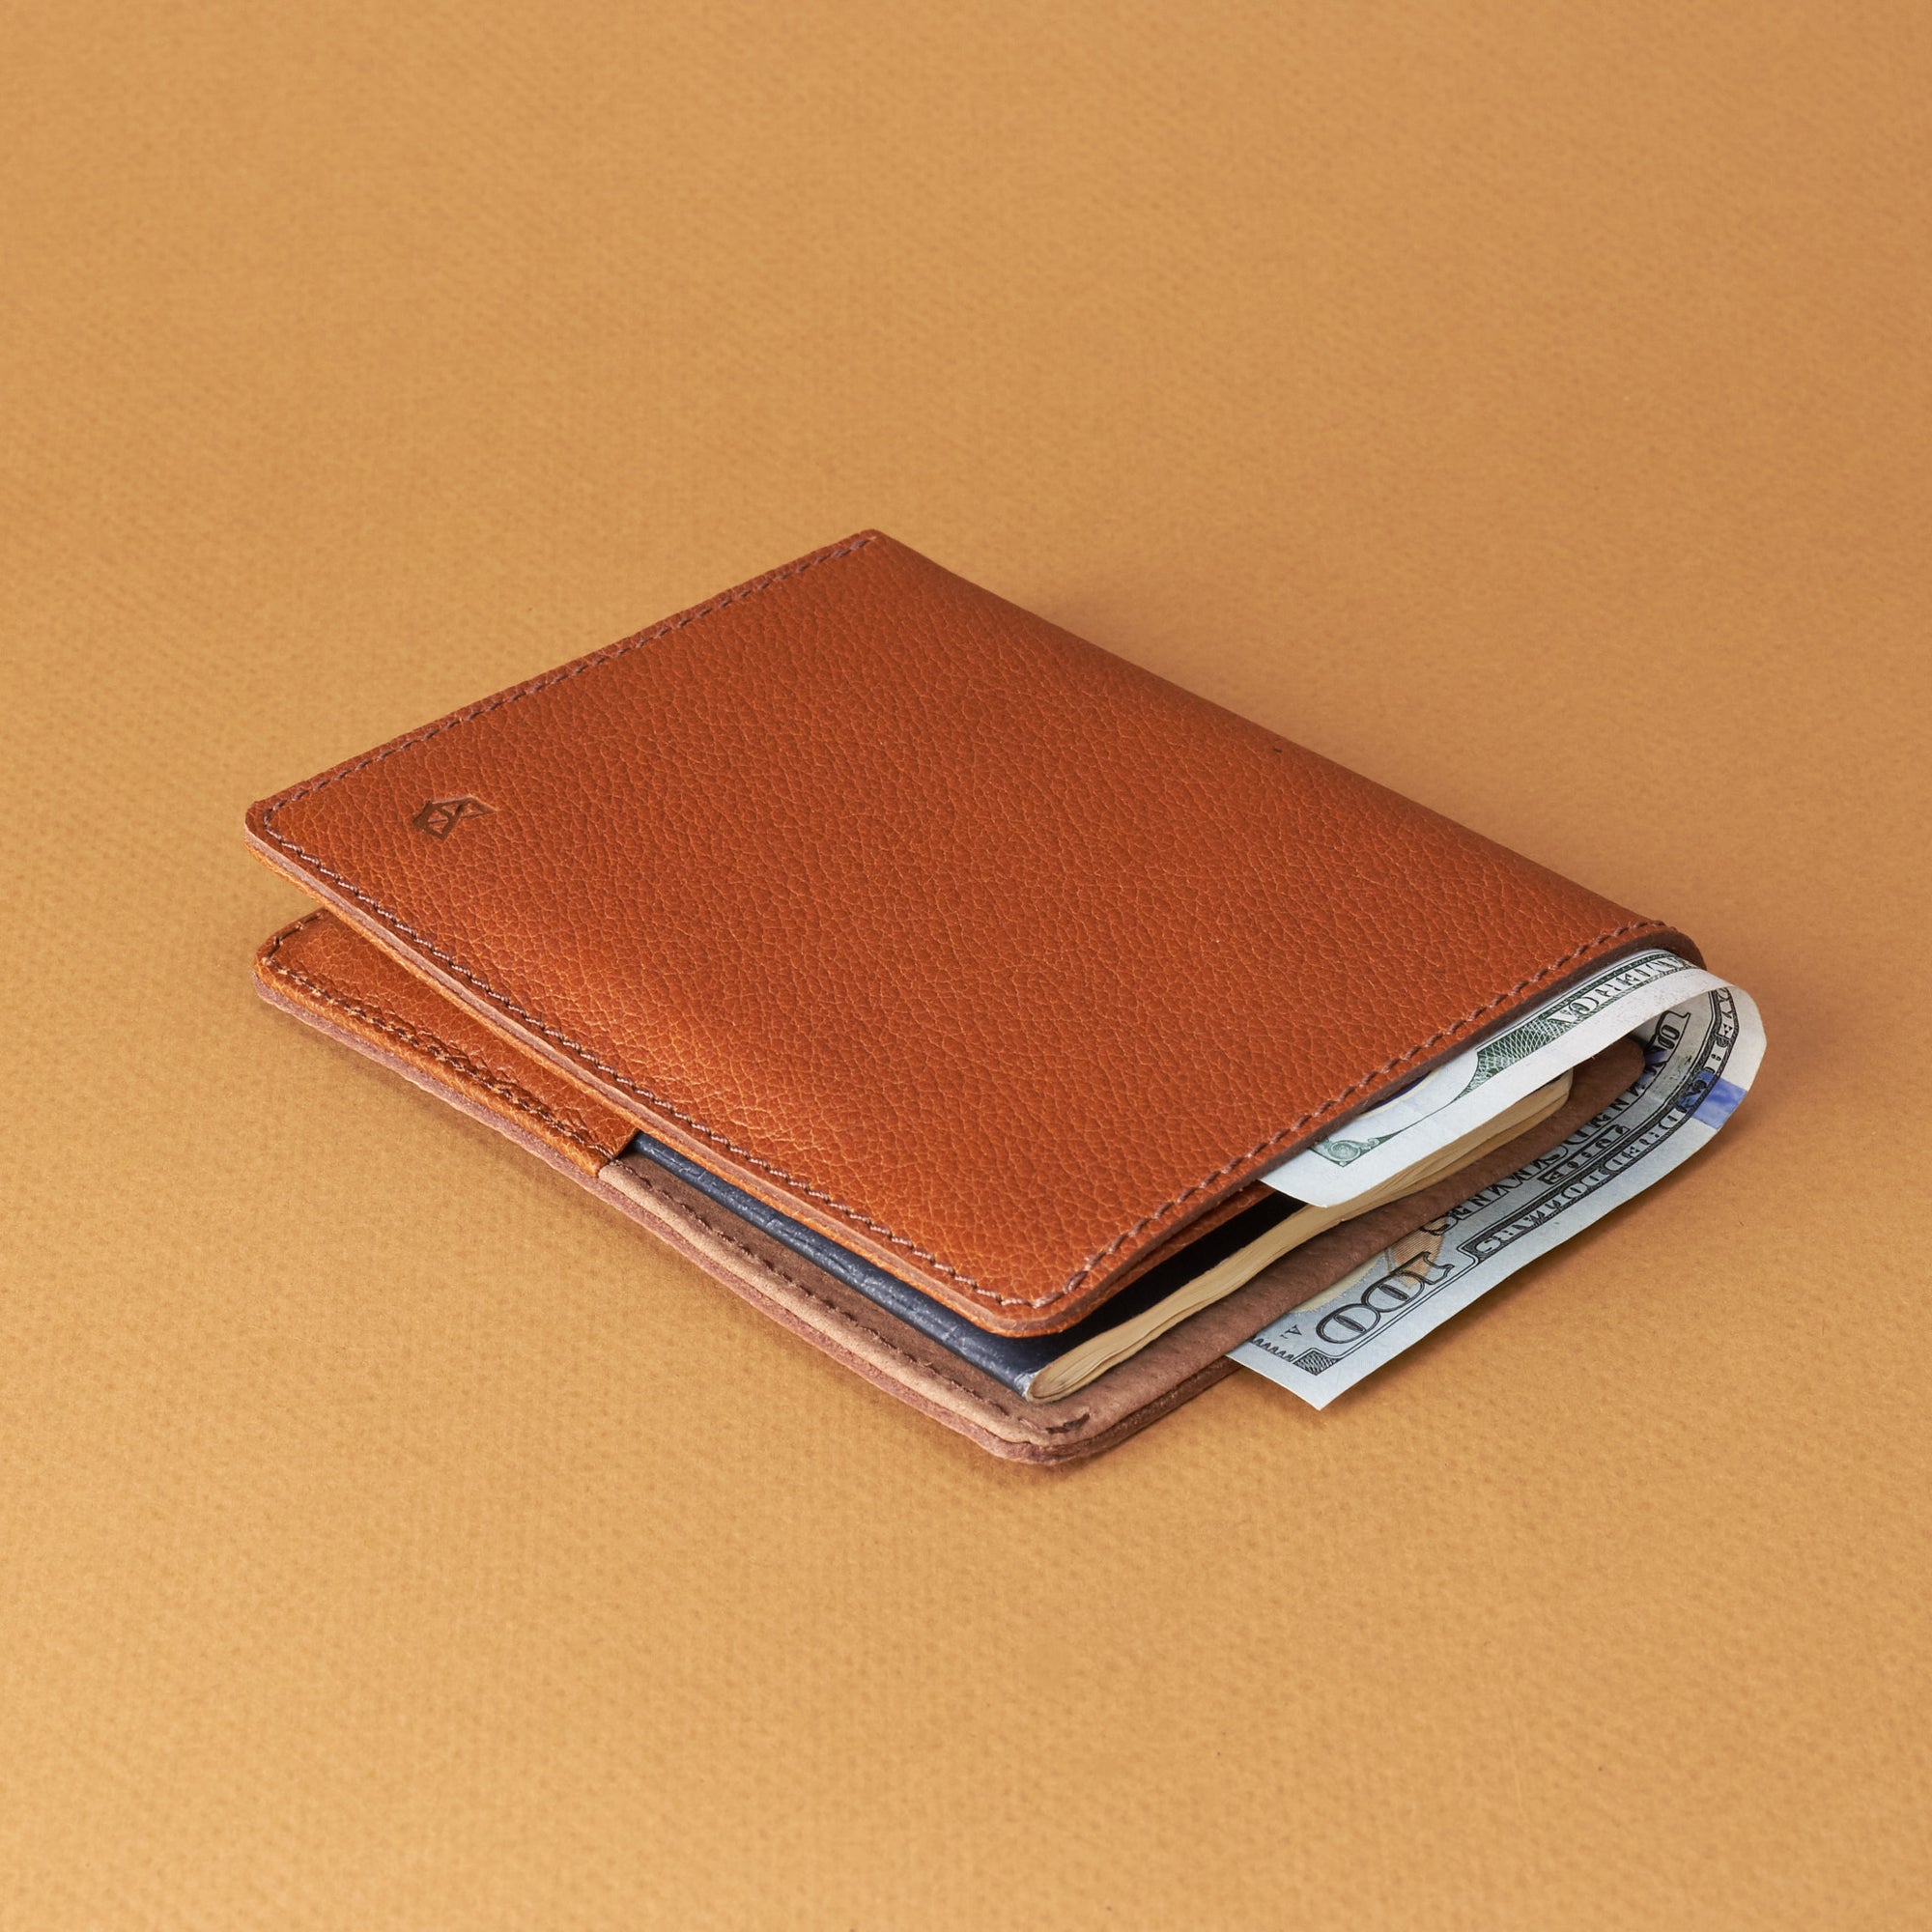 Travel wallet. Pocket Passport Holder Travel Wallet Tan by Capra Leather